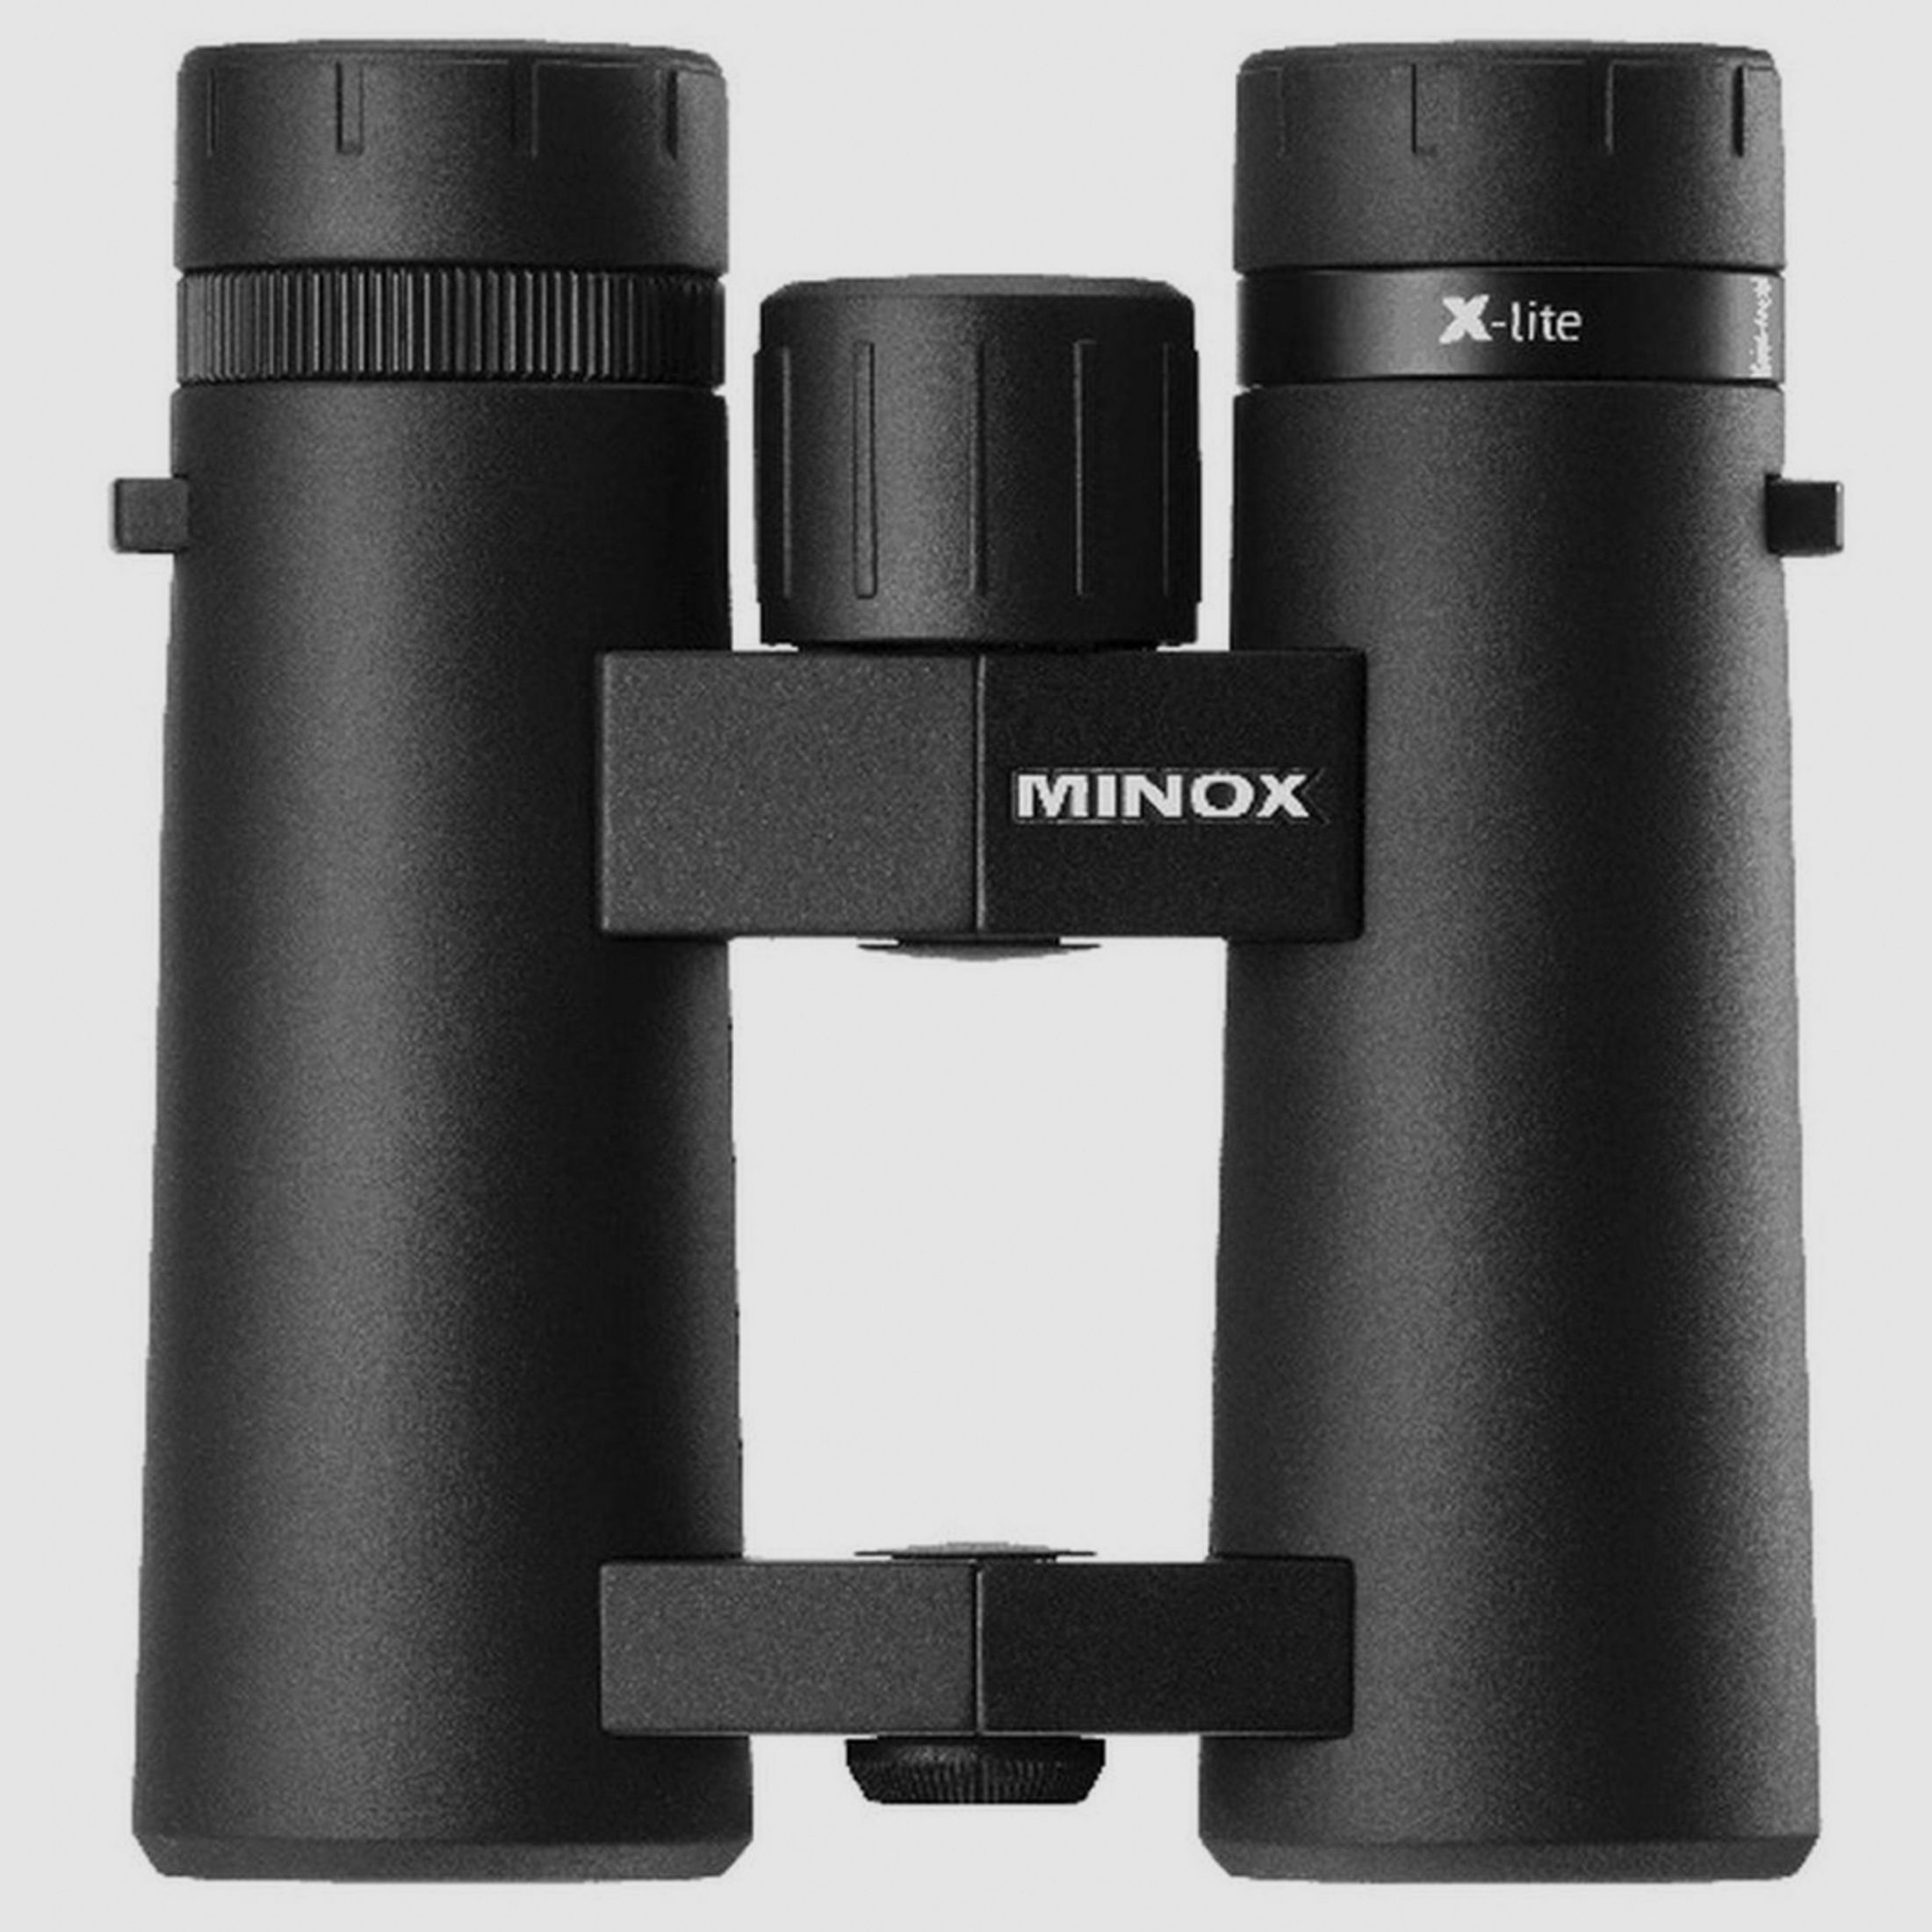 Minox Minox X-lite 10x26 -11,90€ 10% Fernglas Rabatt 107,10 Effektivpreis